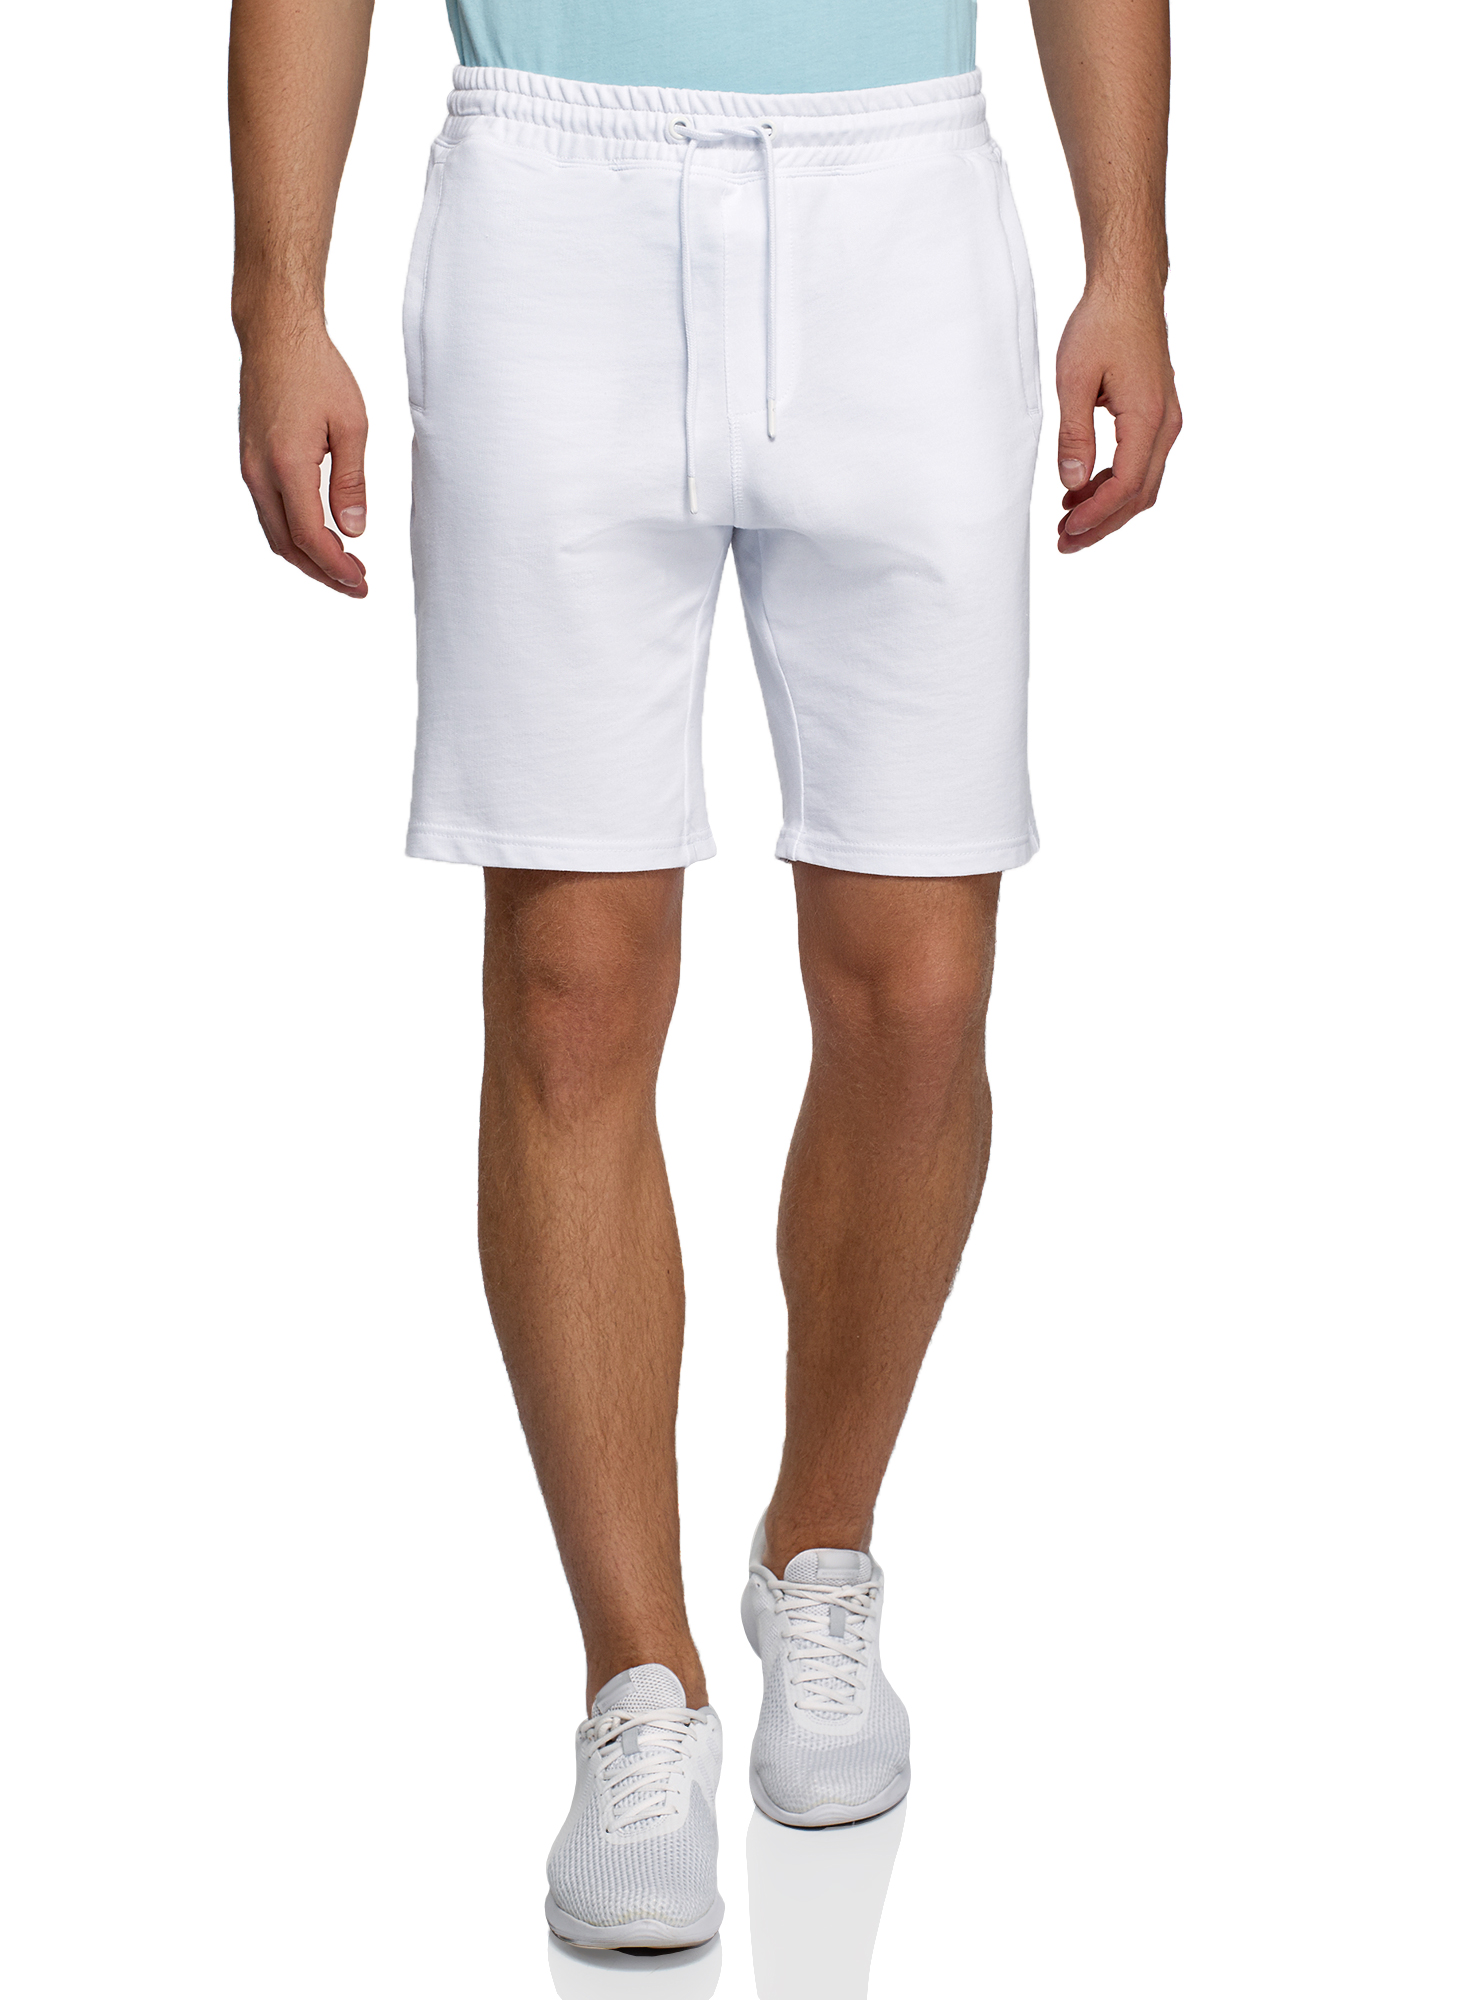 Oodji Lab designed in France шорты мужские белые